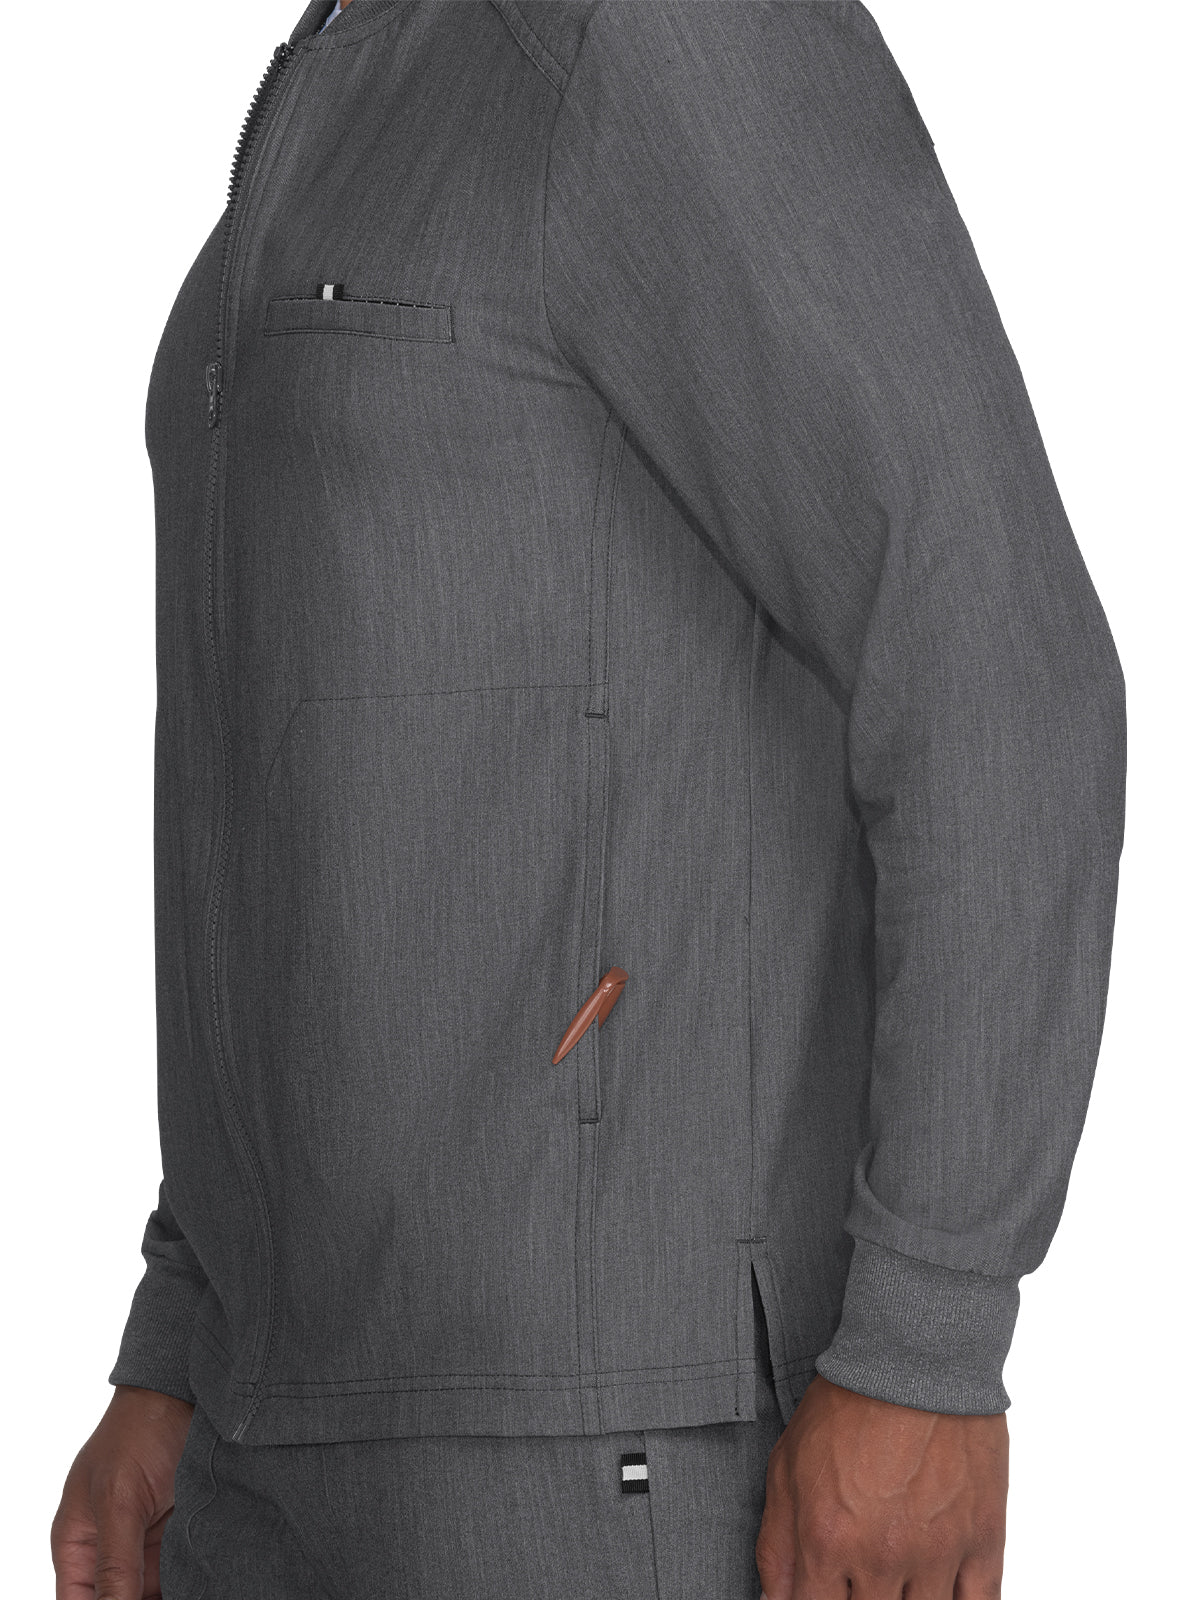 Men's Zipper Front Scrub Jacket